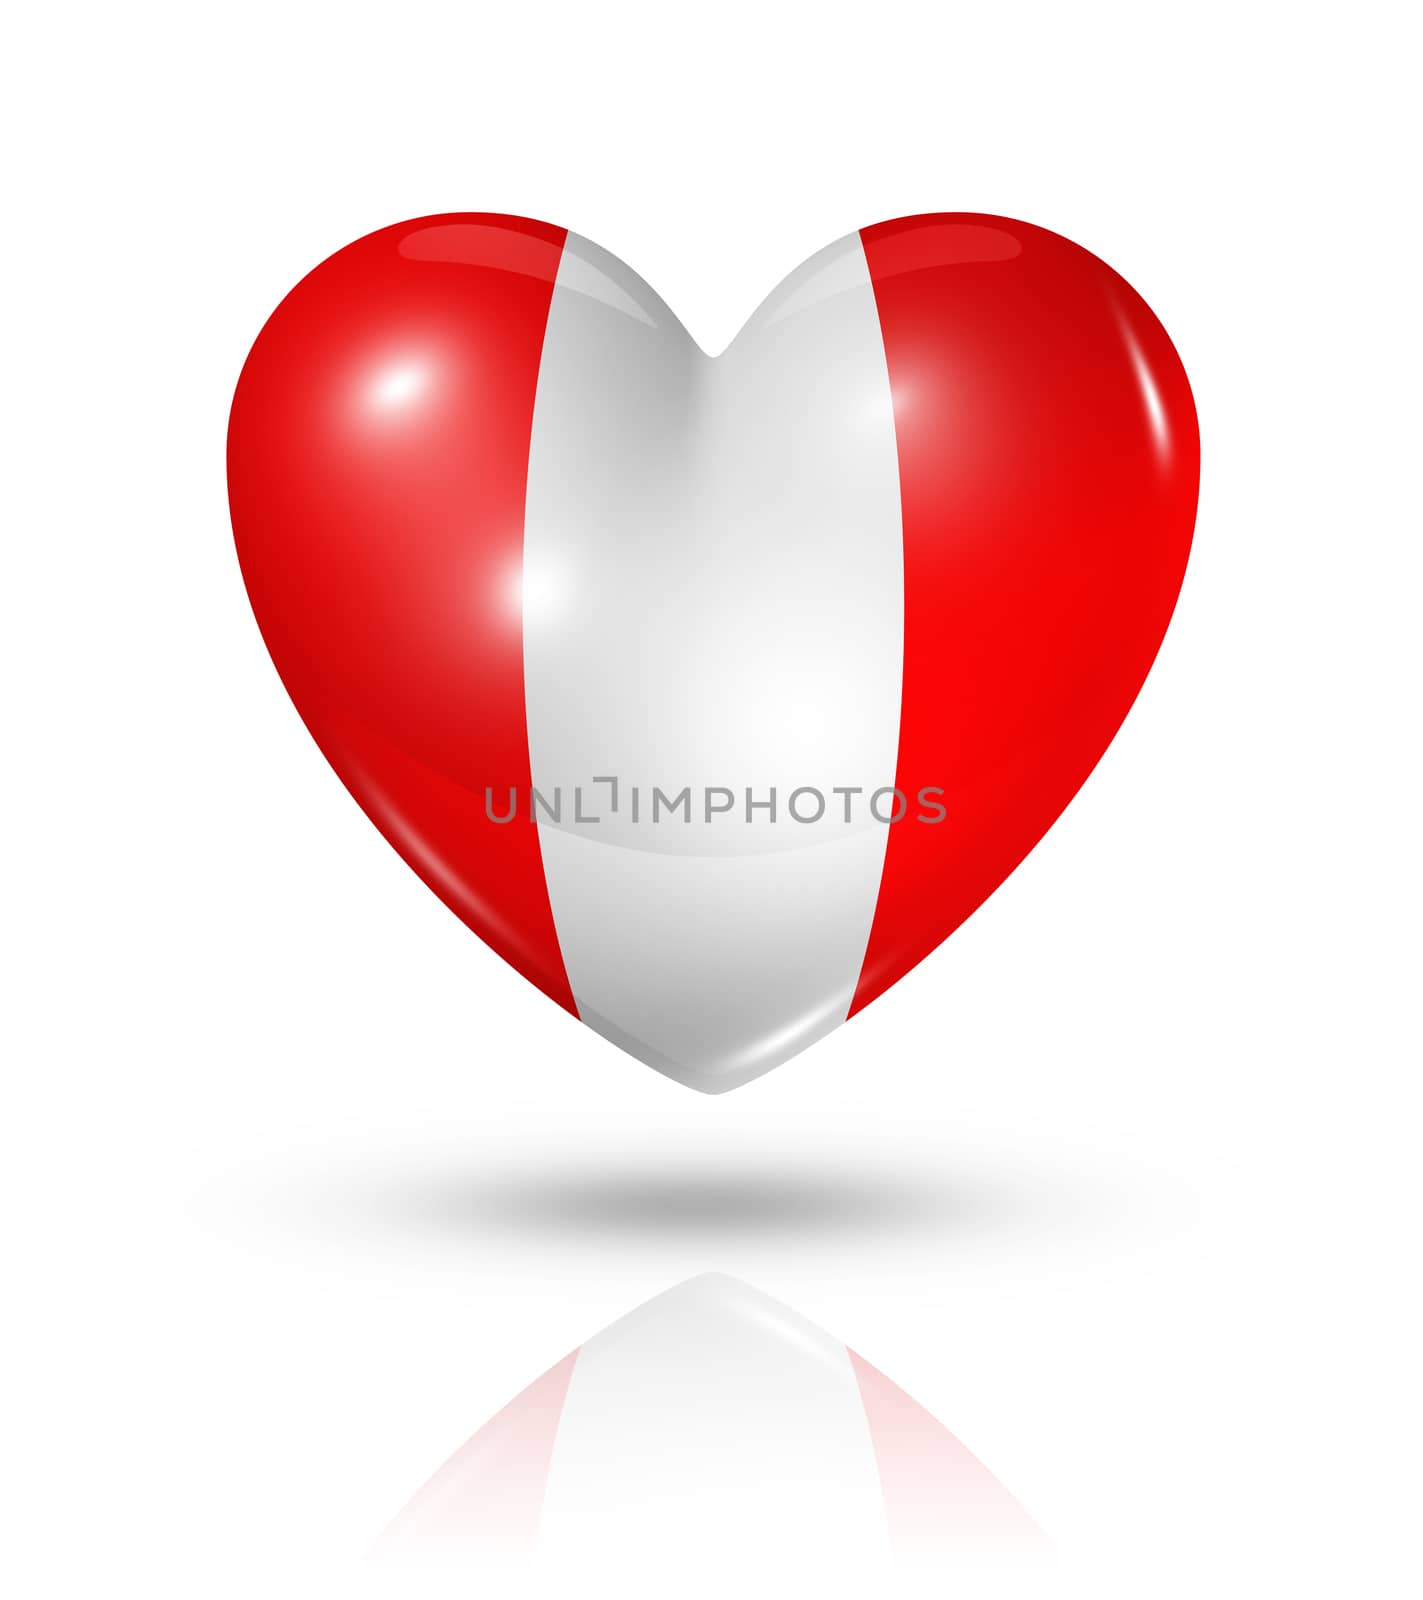 Love peru, heart flag icon by daboost